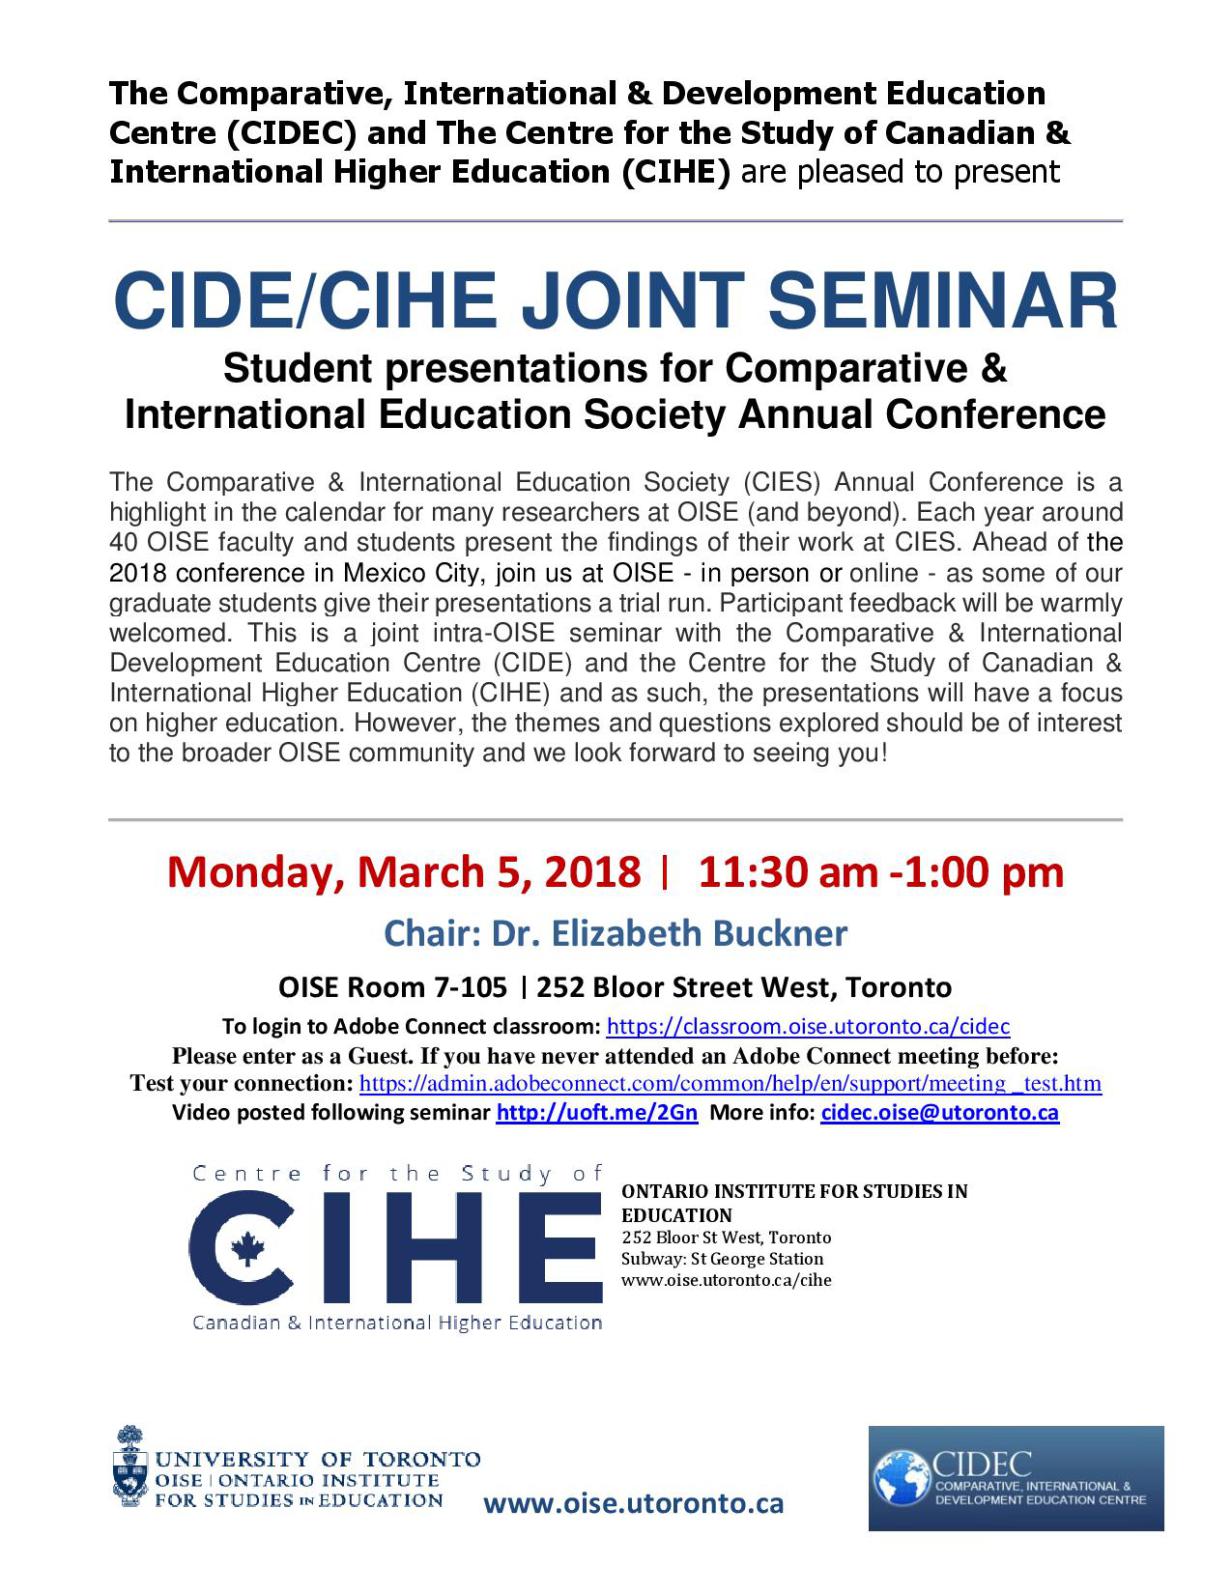 cihe-cide-joint-seminar-mar-5-2018